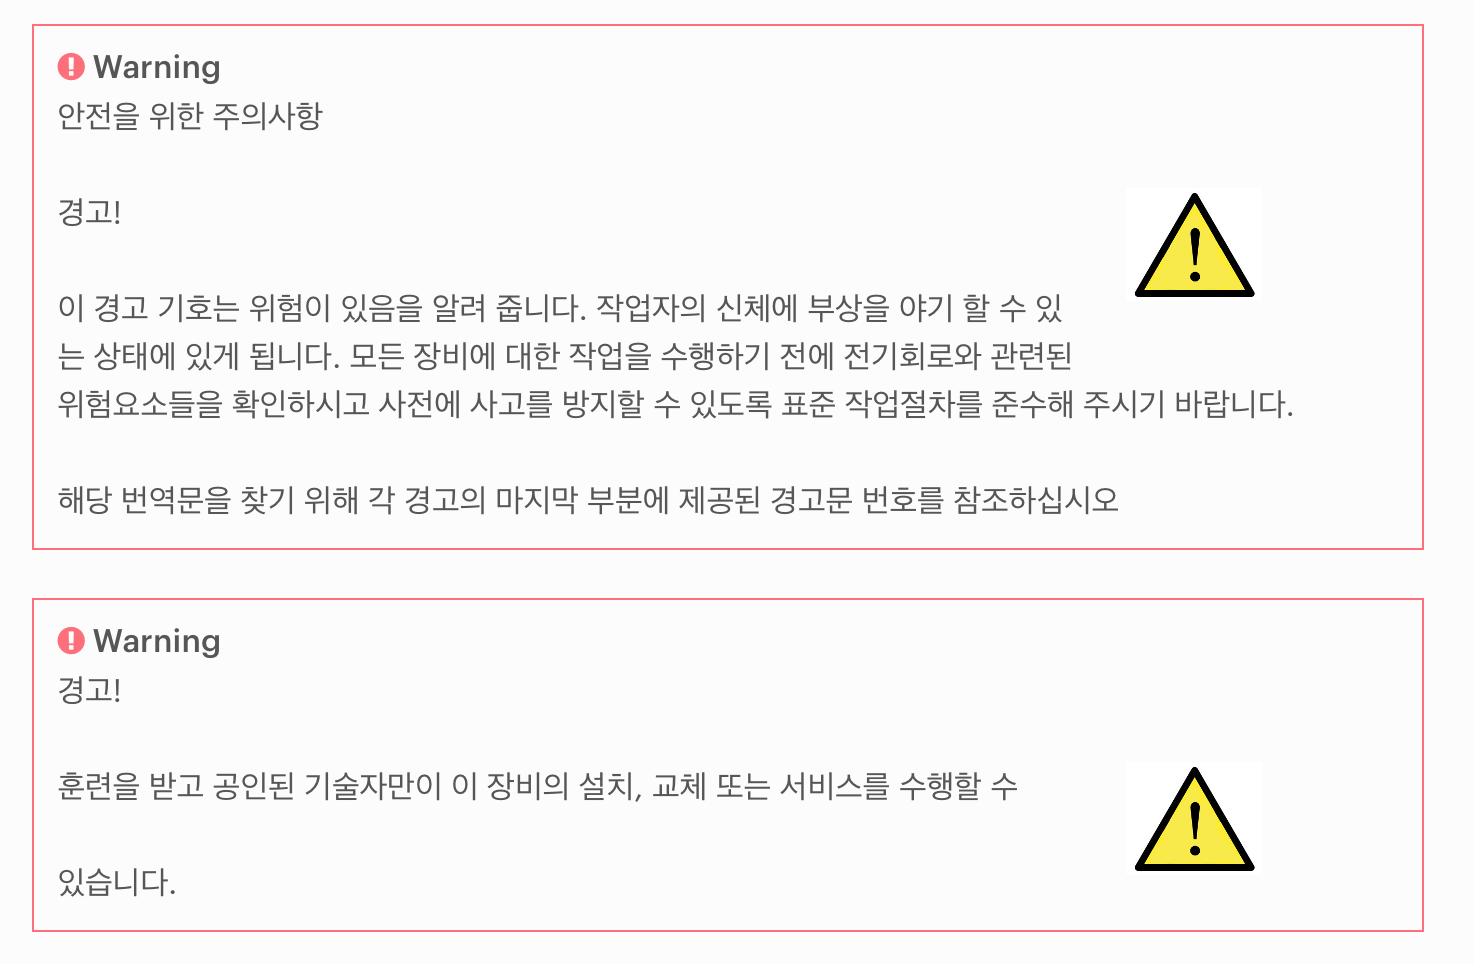 _images/korean-warnings-1.png